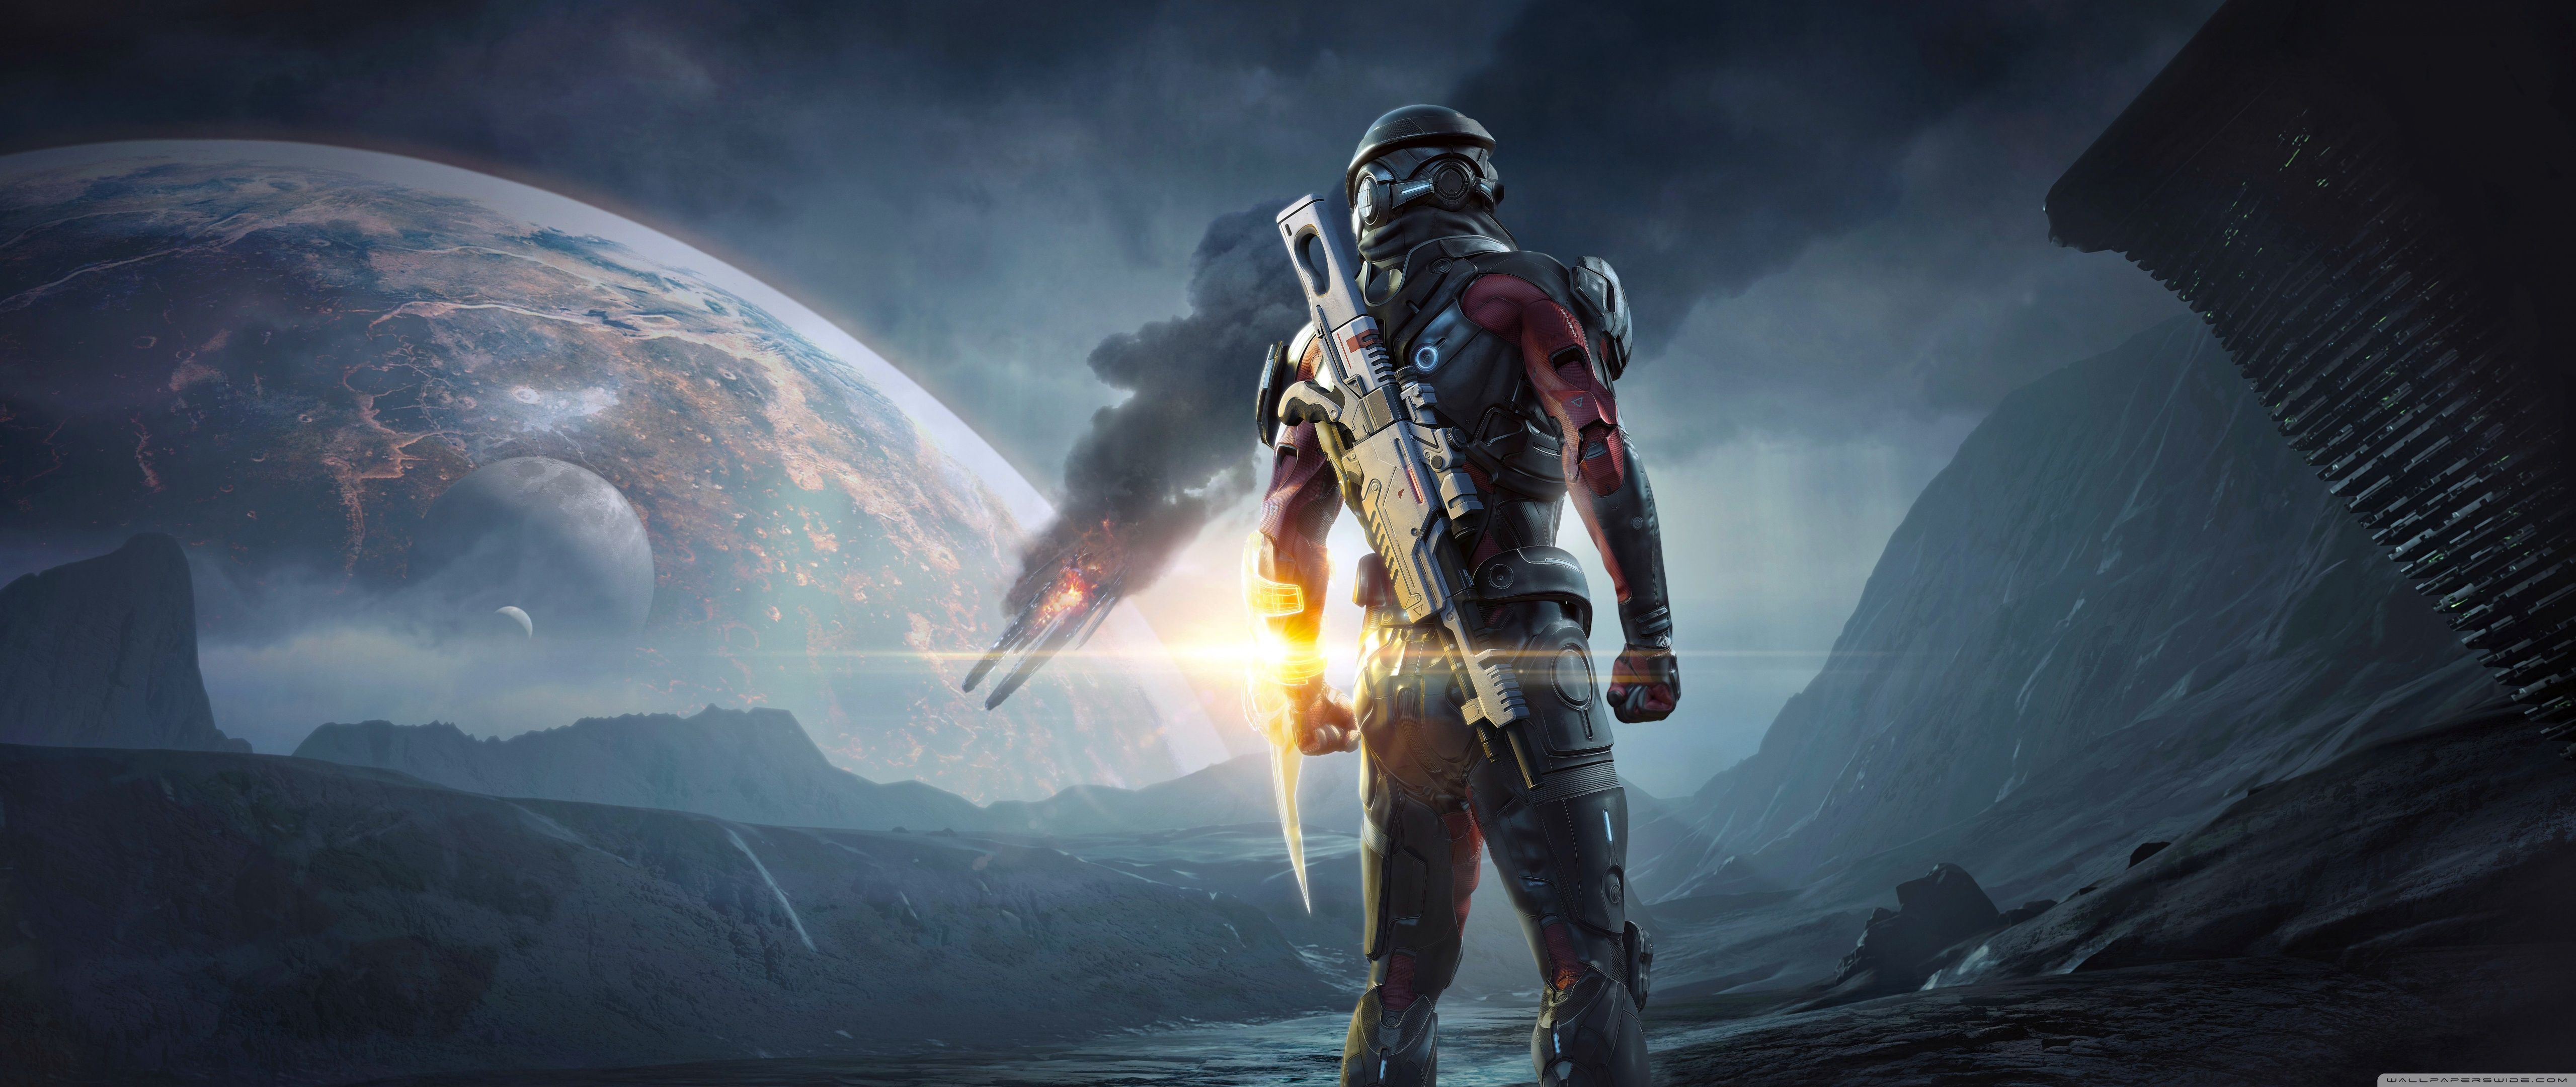 Mass Effect Andromeda 2017 Video Game ❤ 4k Hd Desktop - Mass Effect Andromeda - HD Wallpaper 